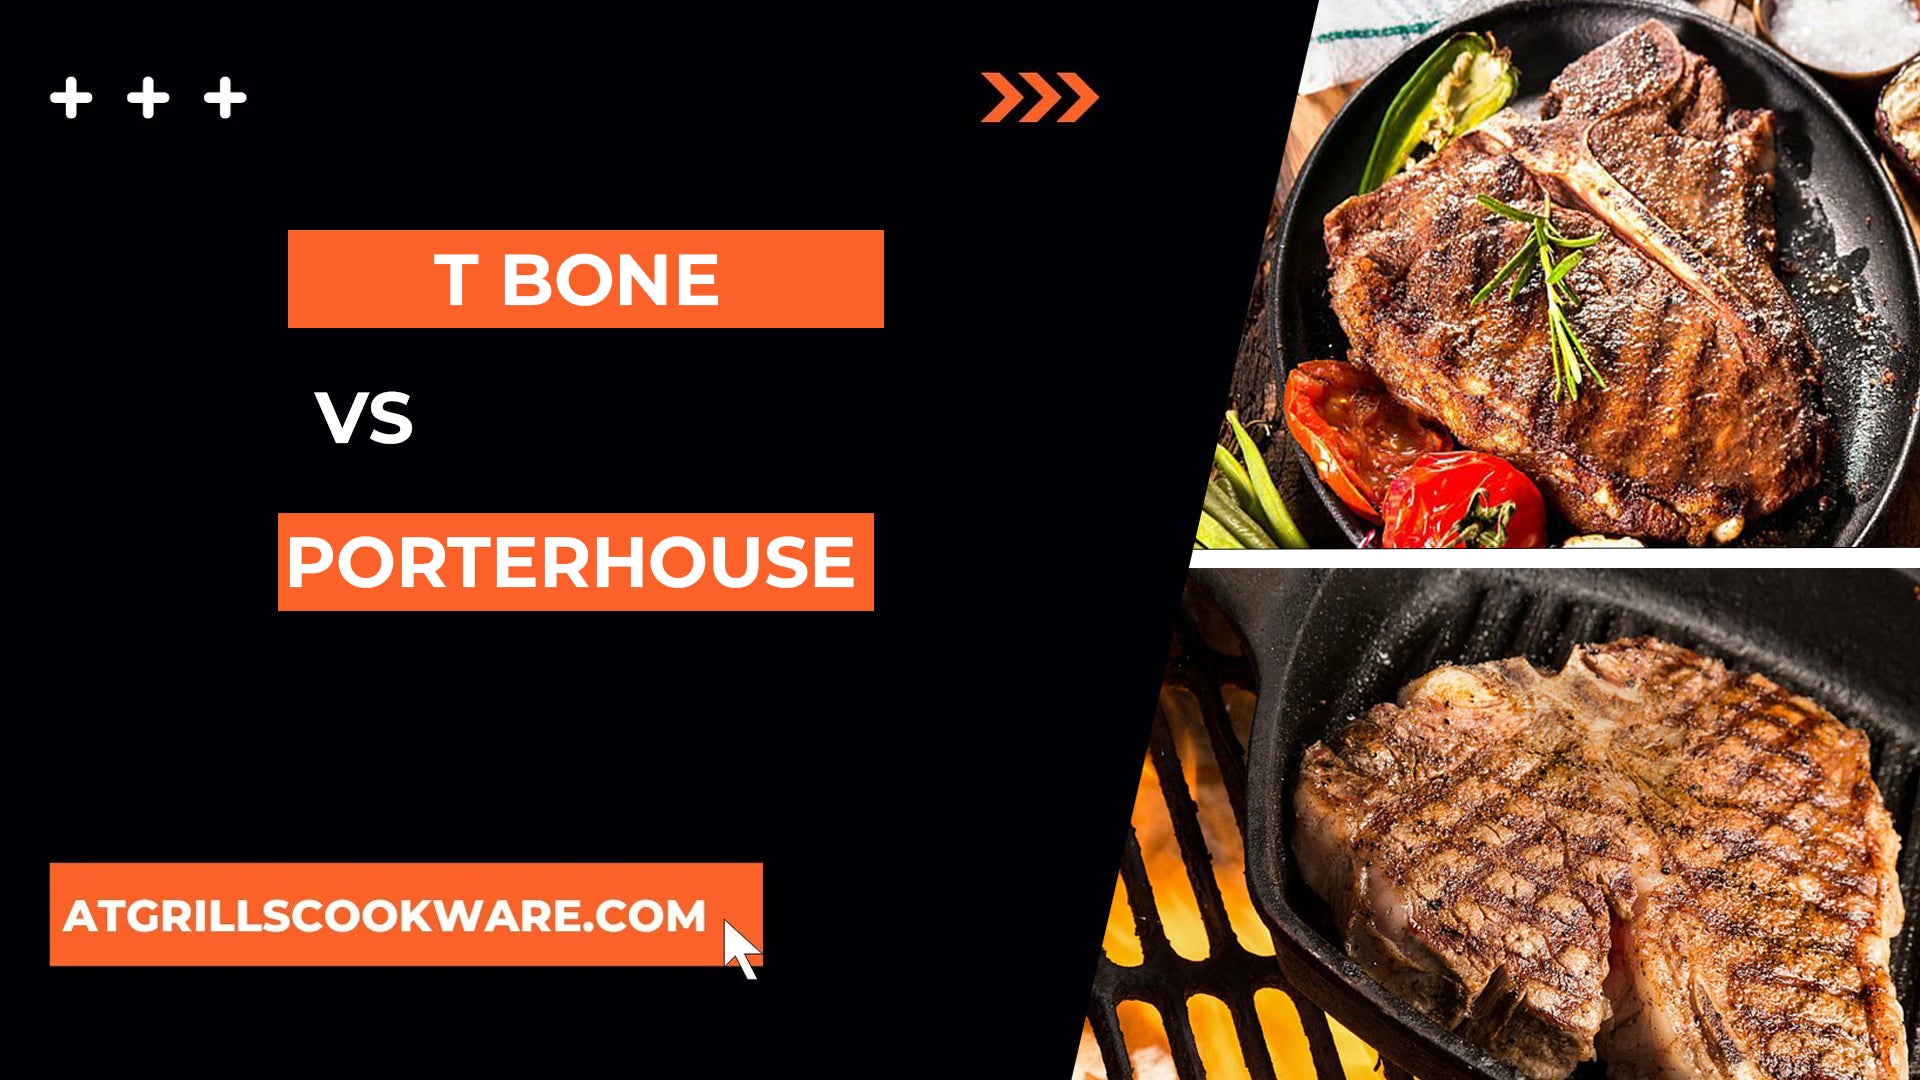 T Bone Vs Porterhouse - atgrillscookware